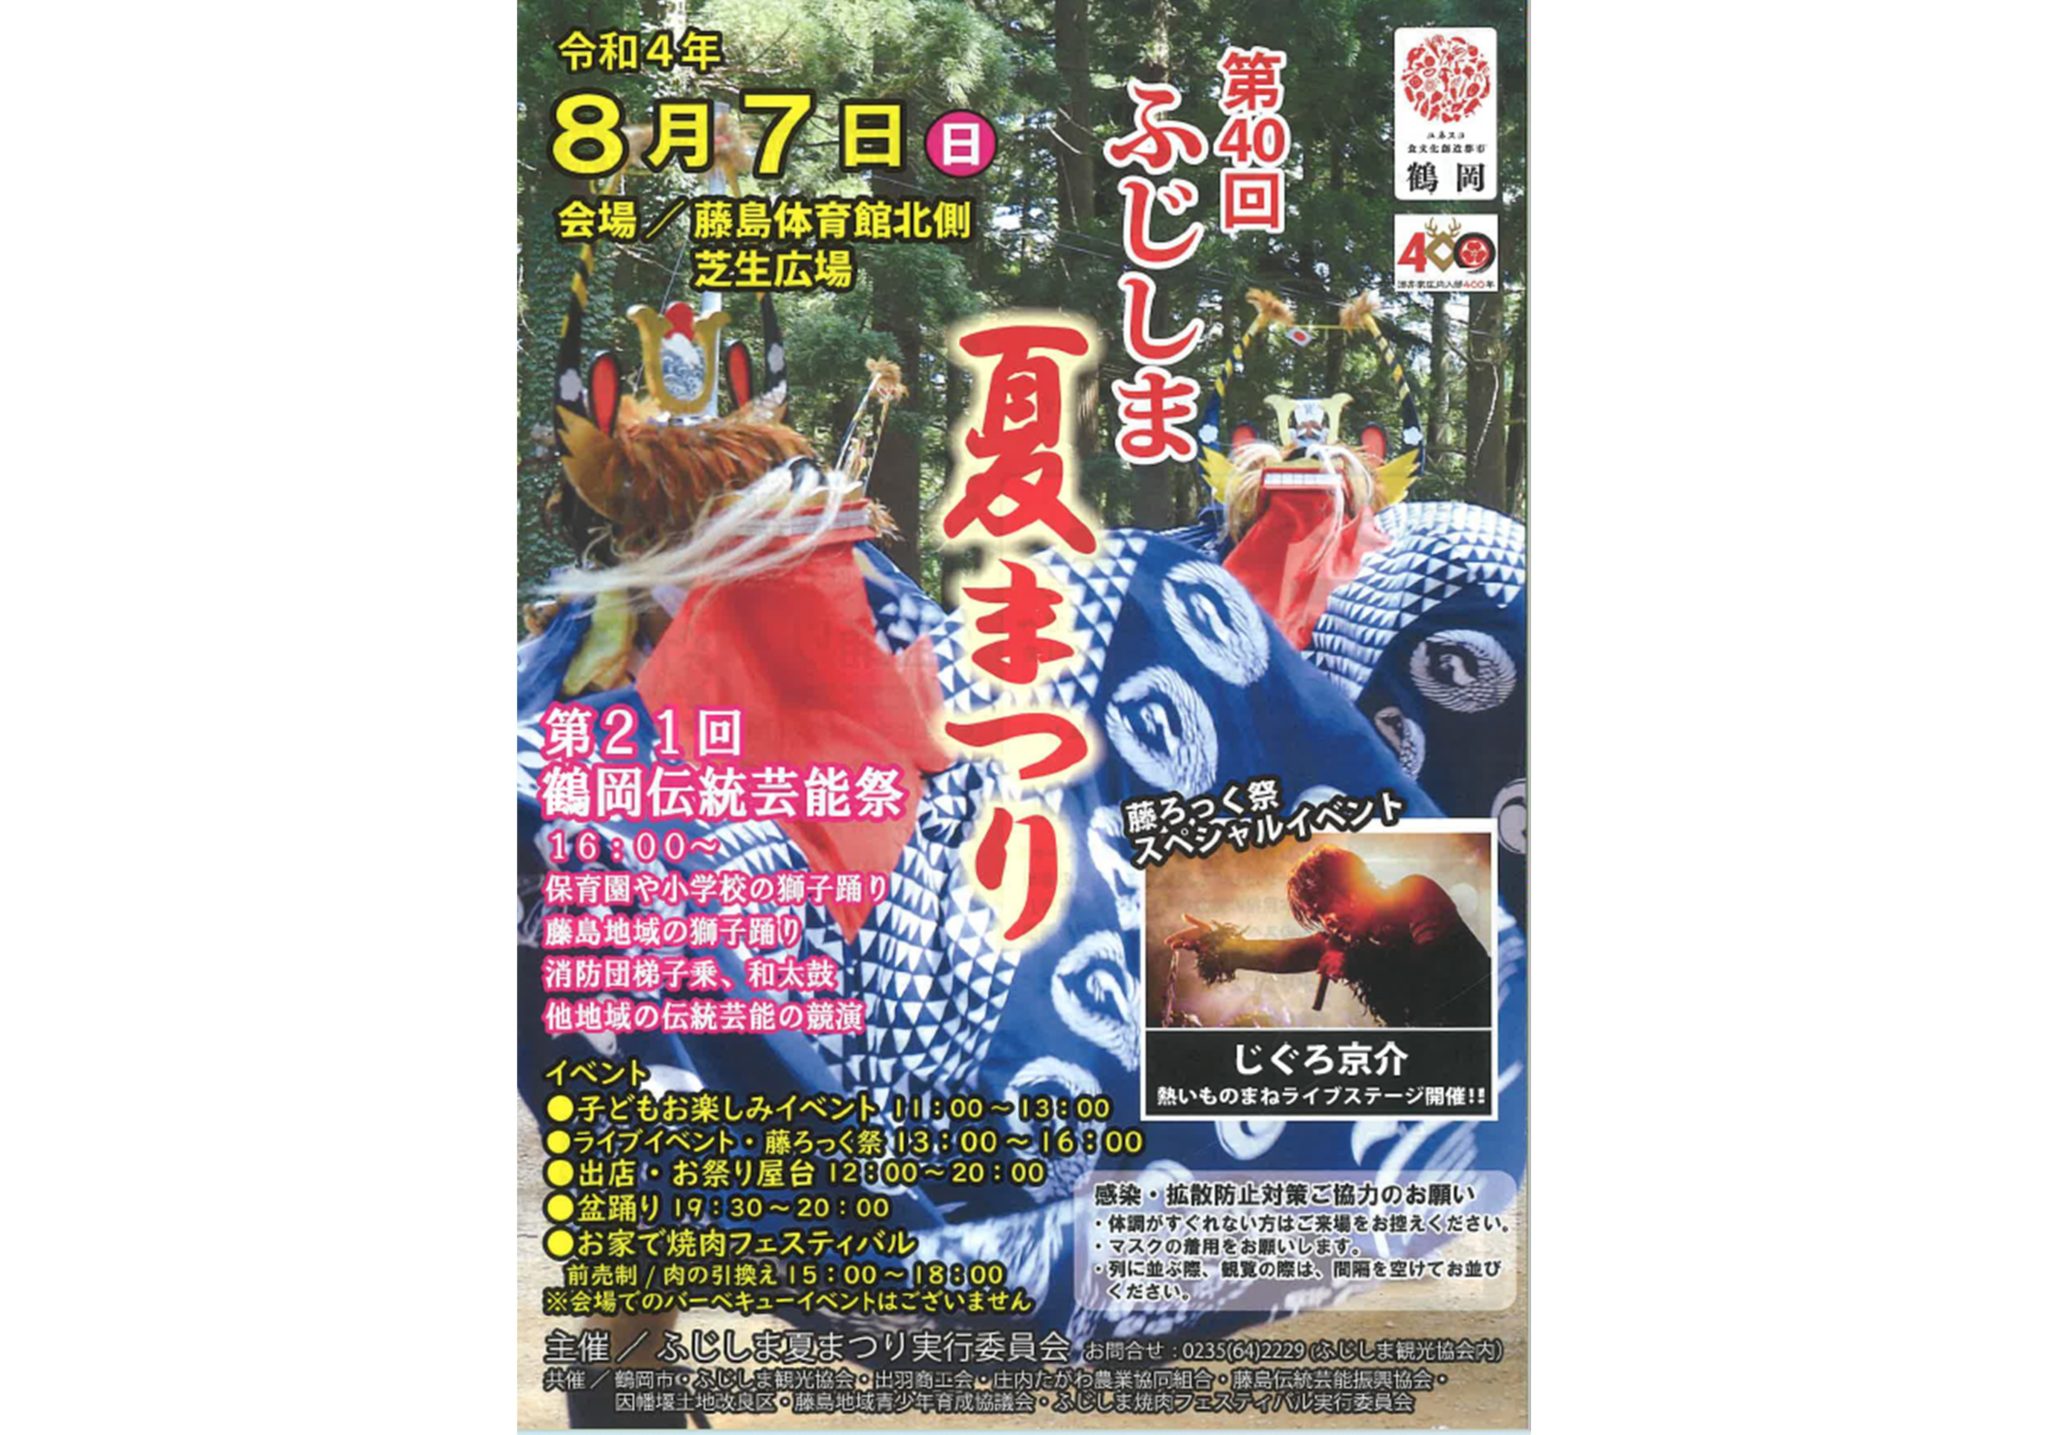 The 40th Fujishima Summer Festival